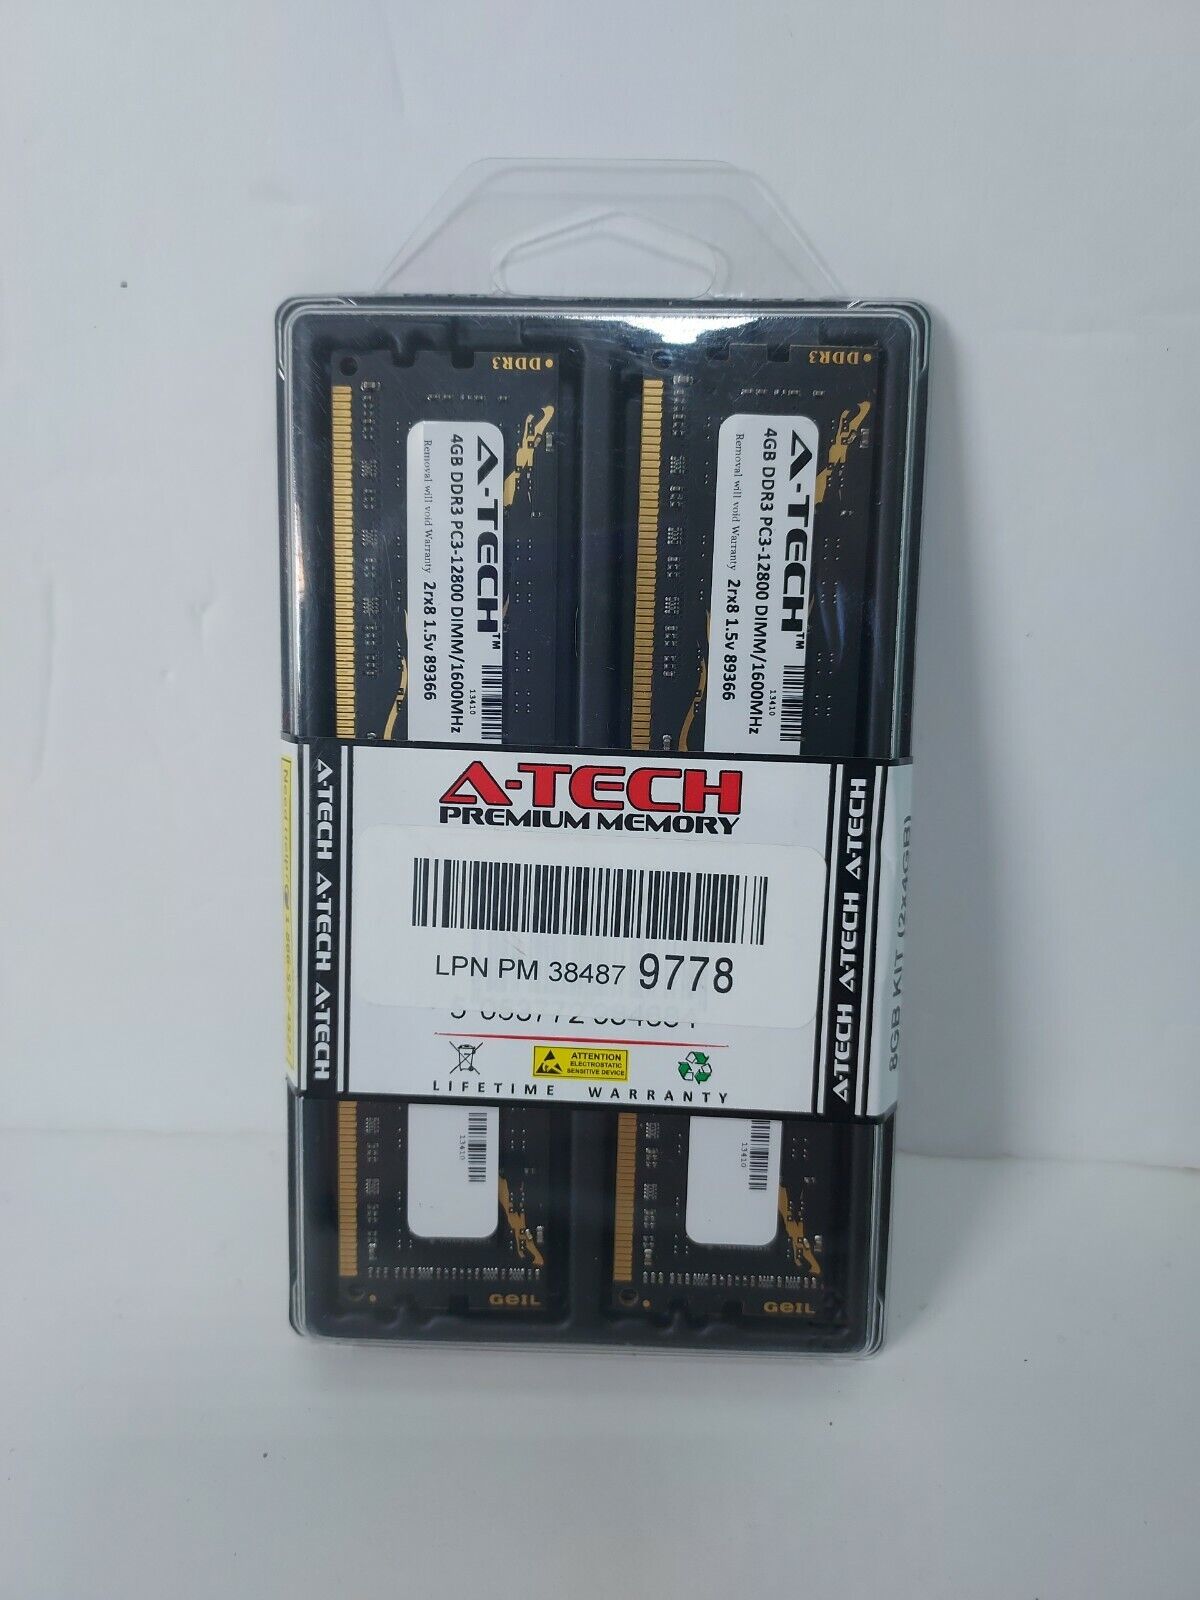 New and Sealed A-Tech 8GB (2x4GB) DDR3 1600MHz PC3-12800 Desktop RAM Kit 